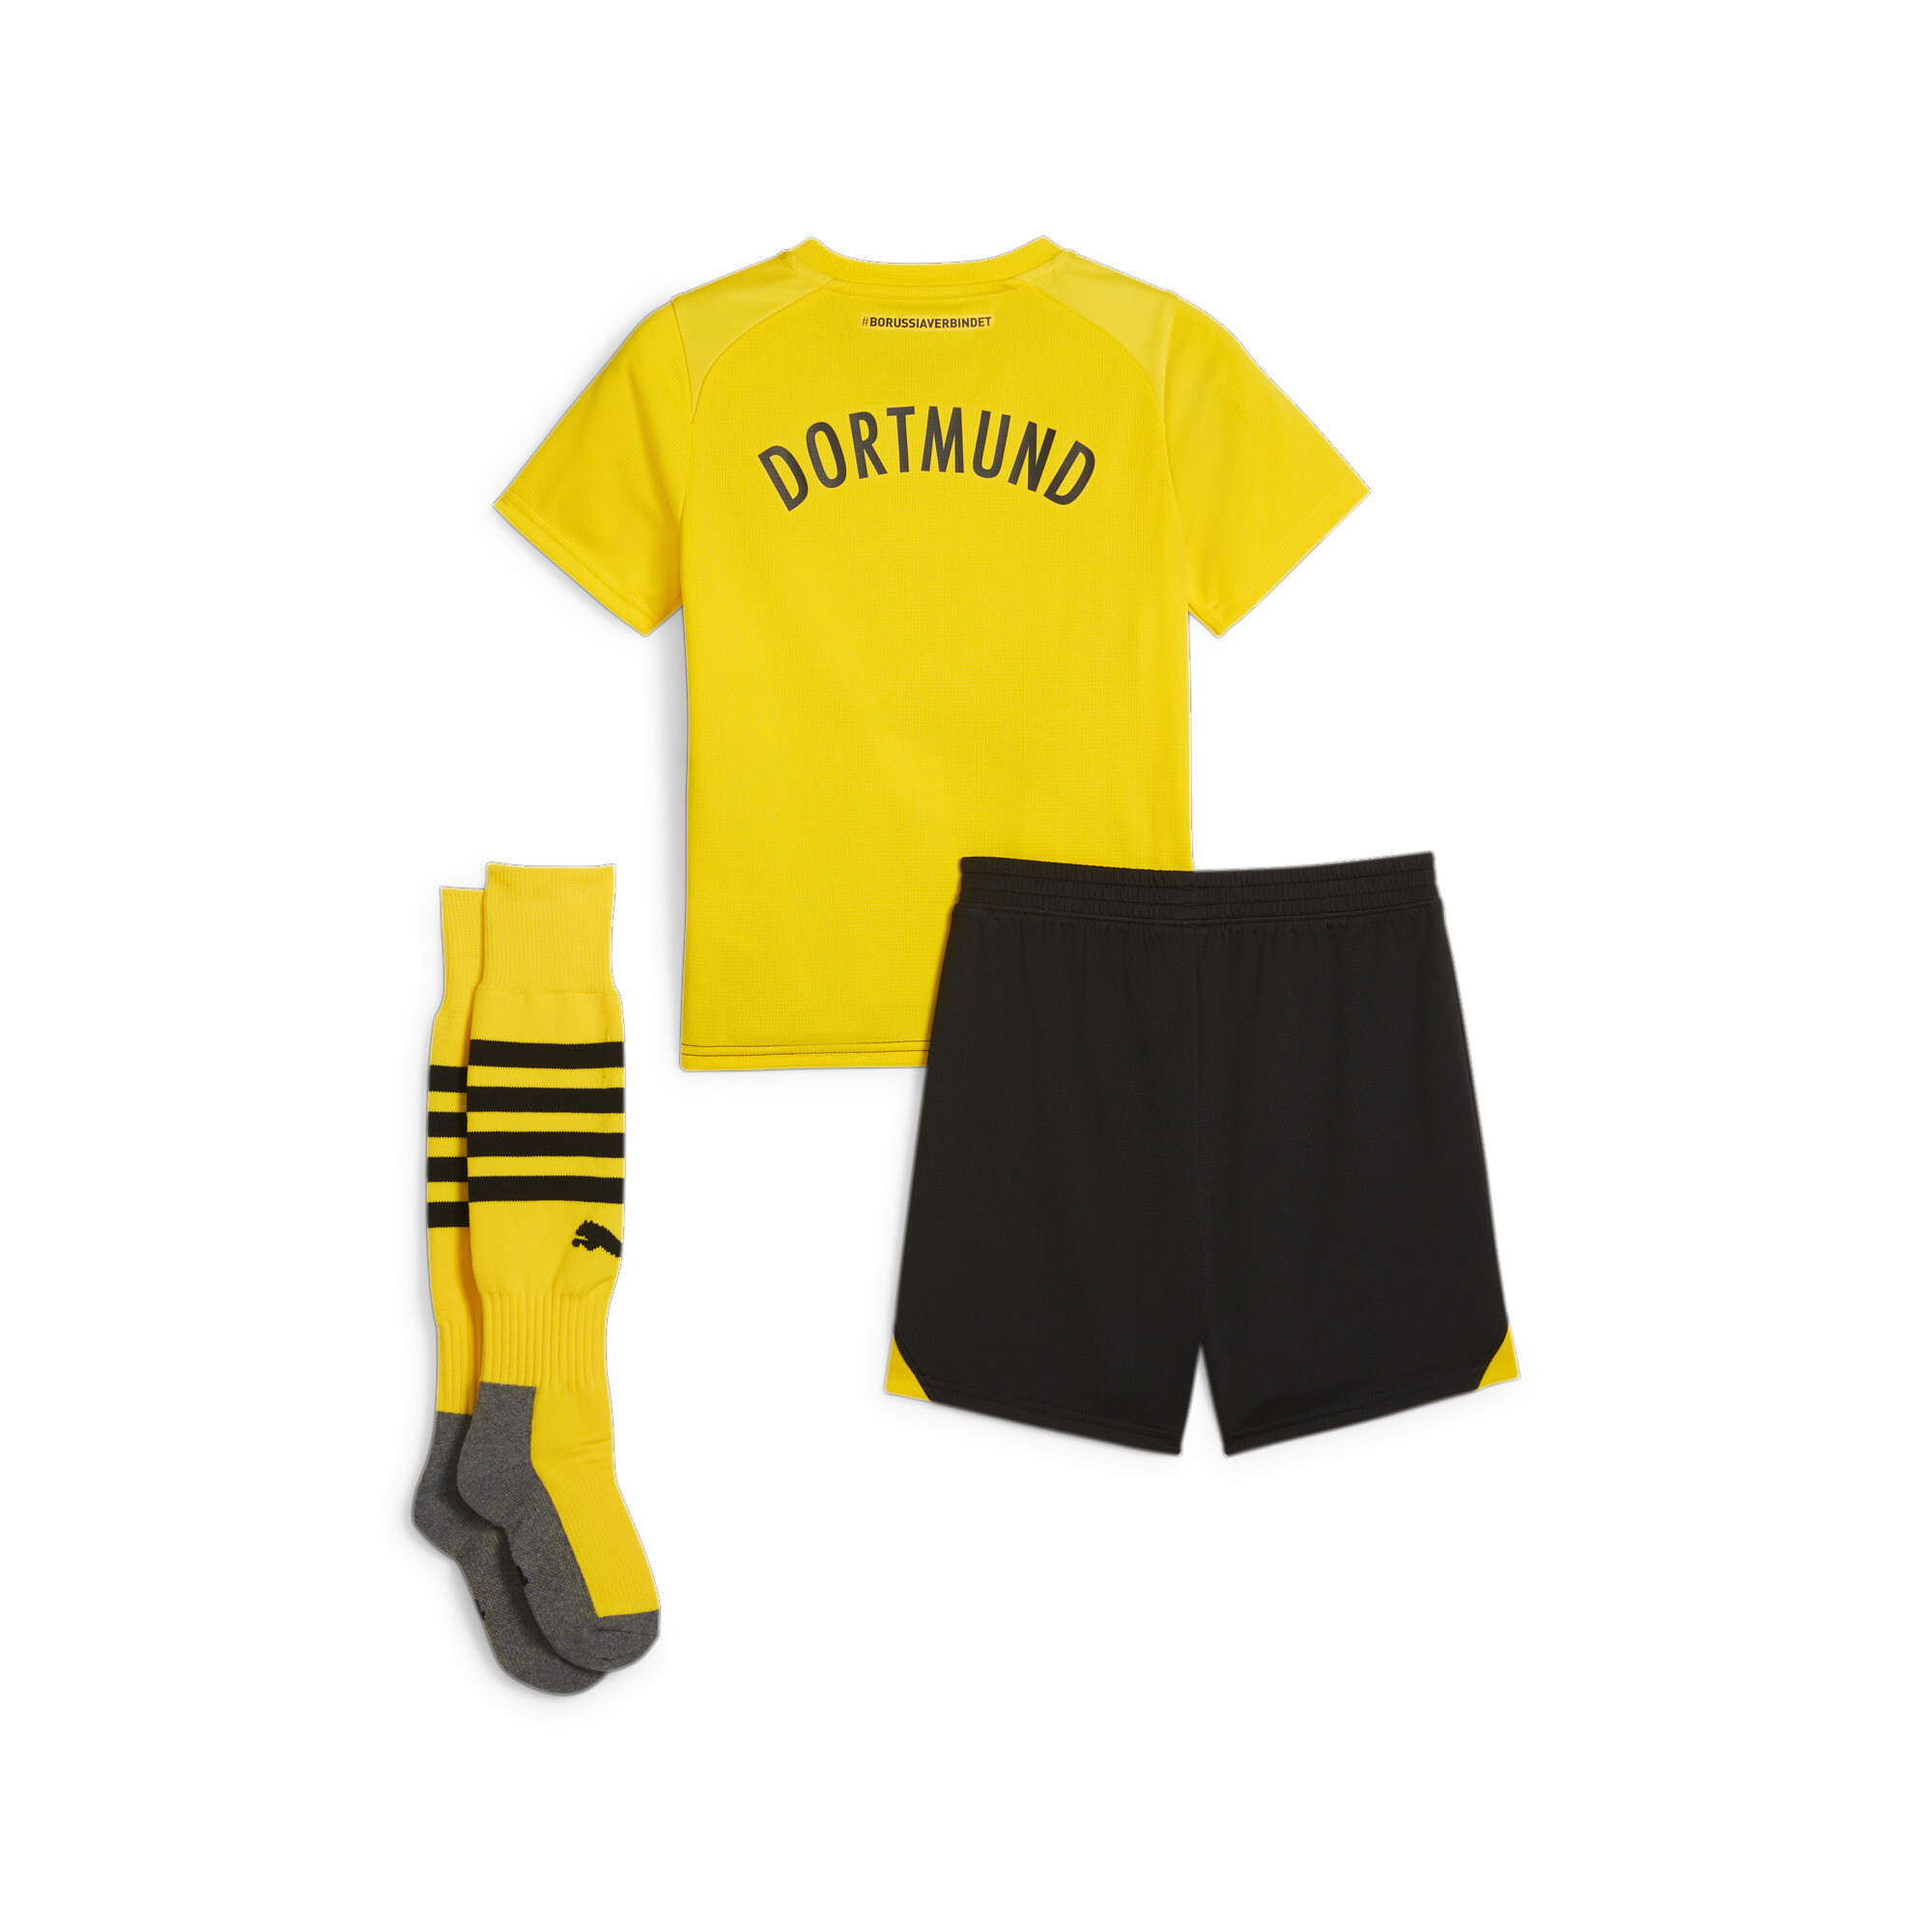 Puma Borussia Dortmund 23/24 Home Minikit, Yellow, Size 3-4Y, Clothing